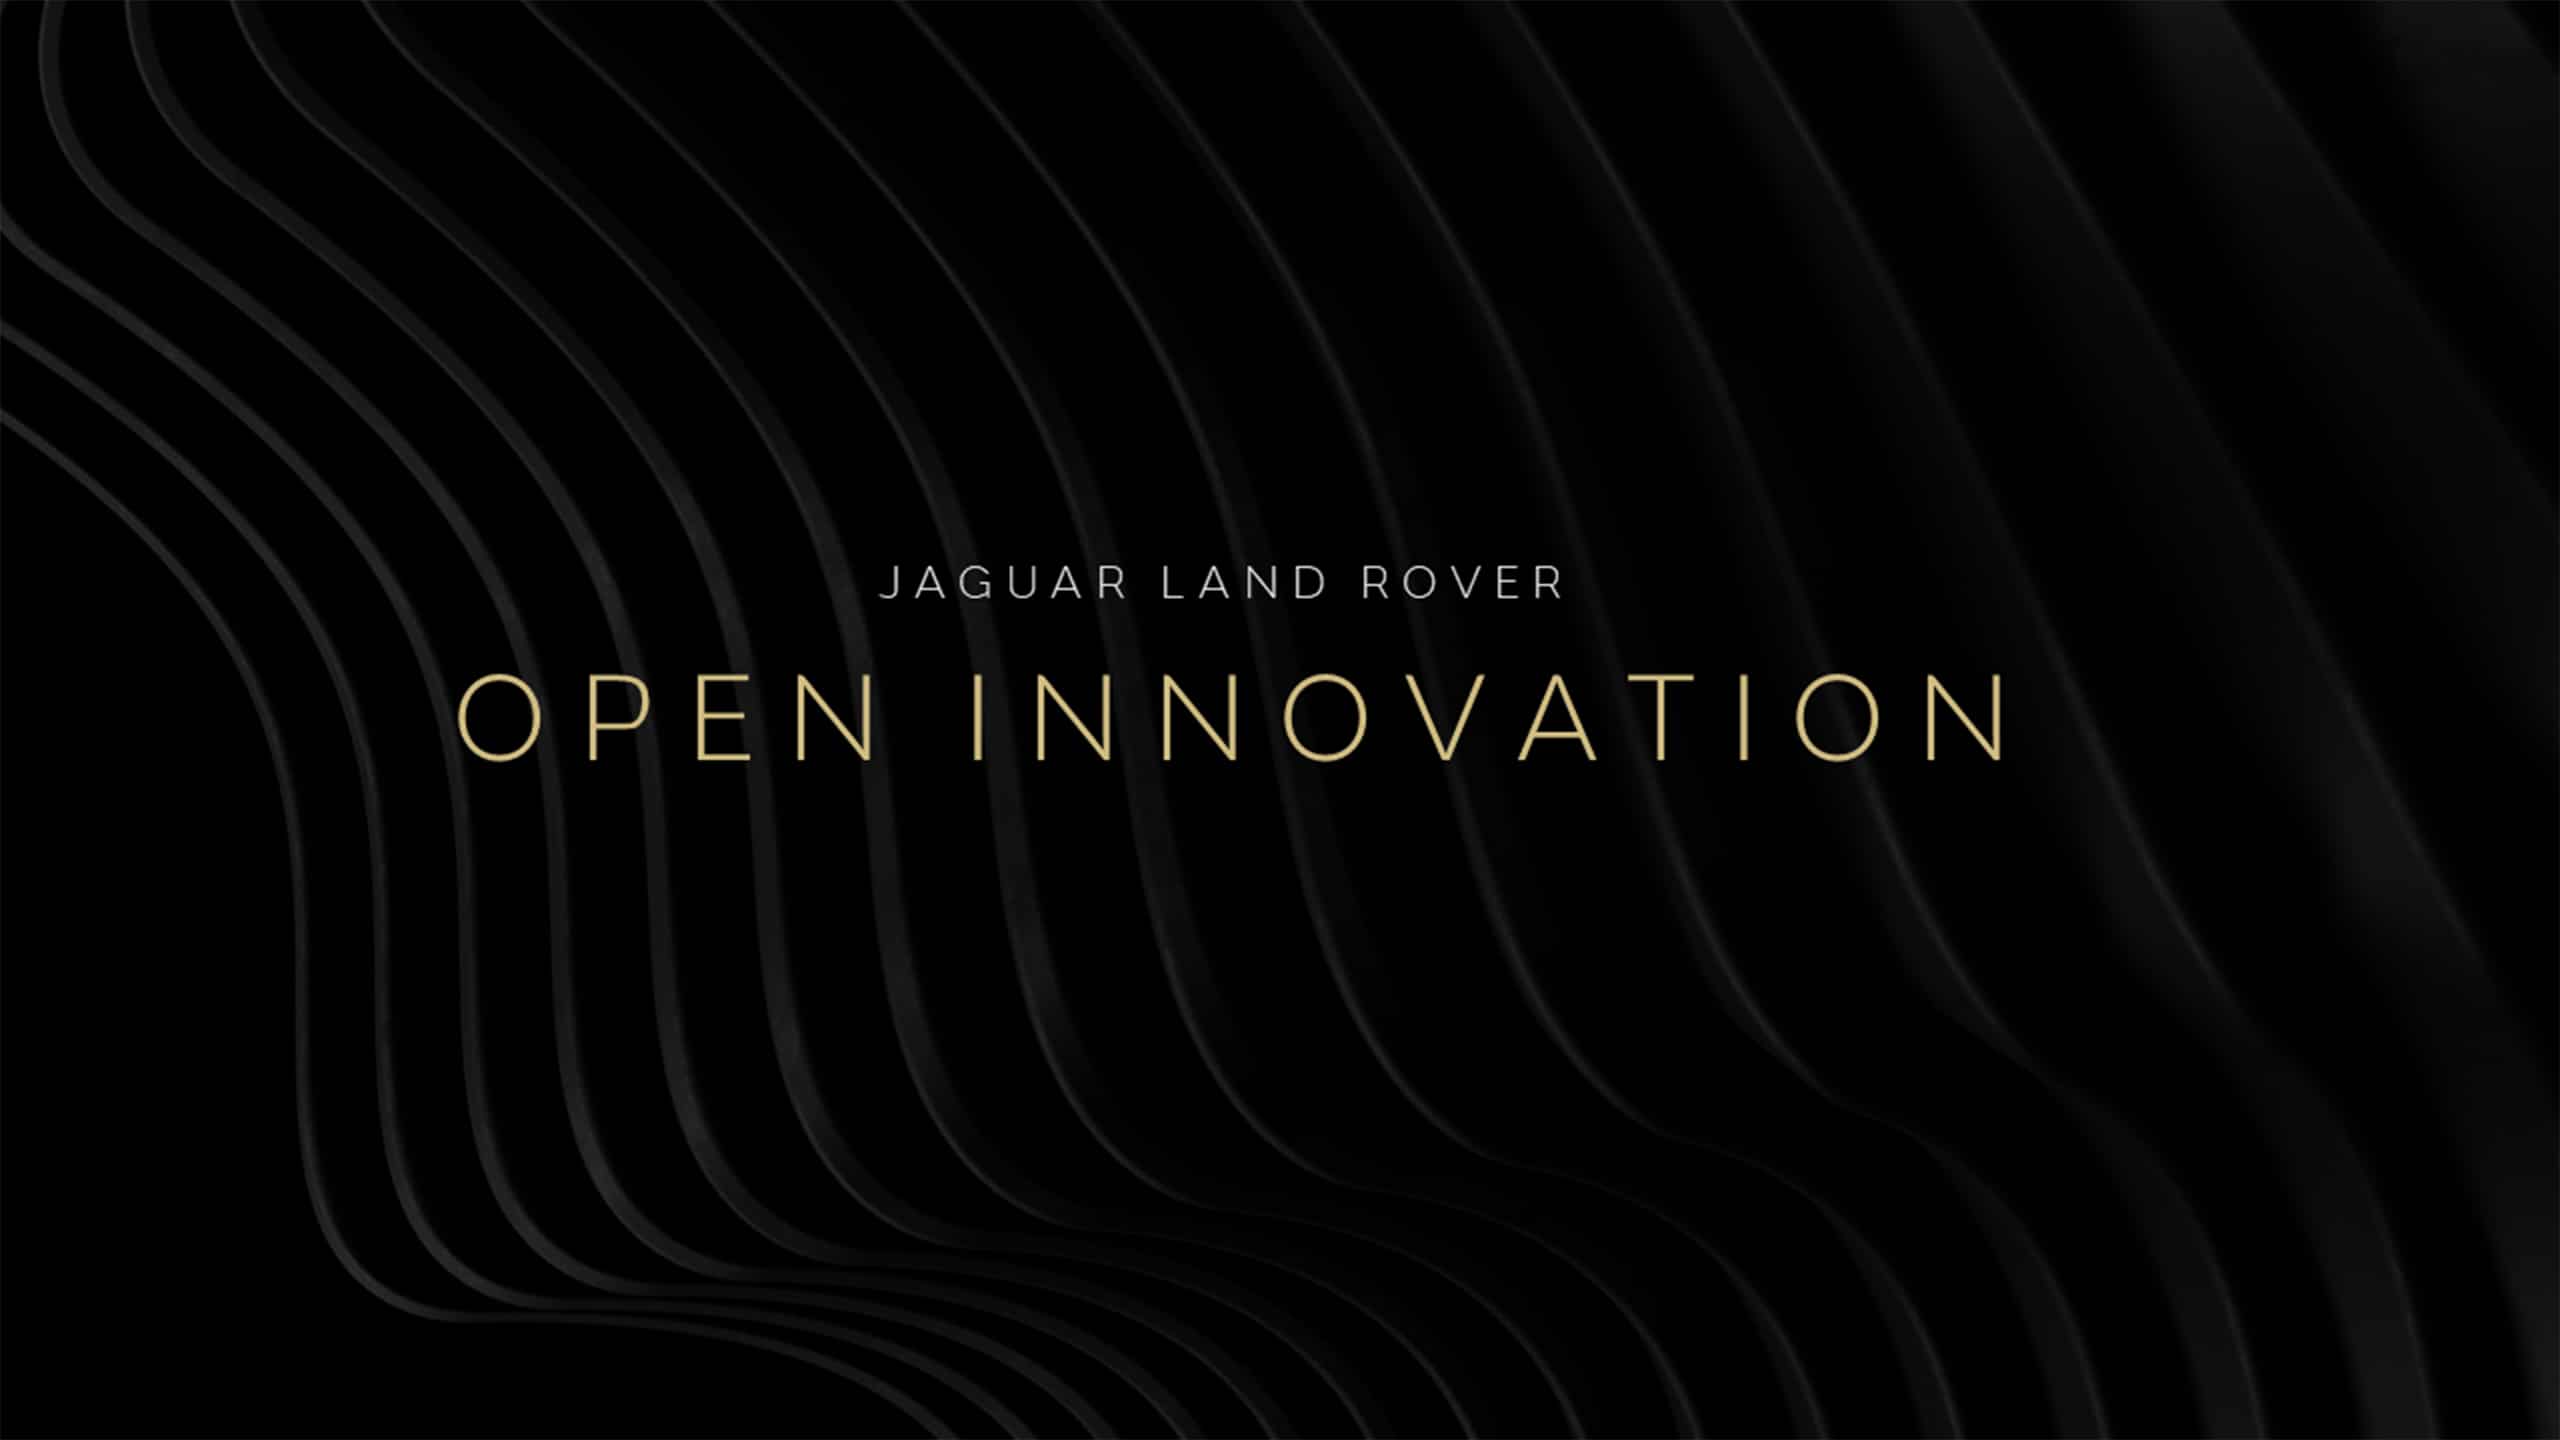 JLR Launched an open innovation development